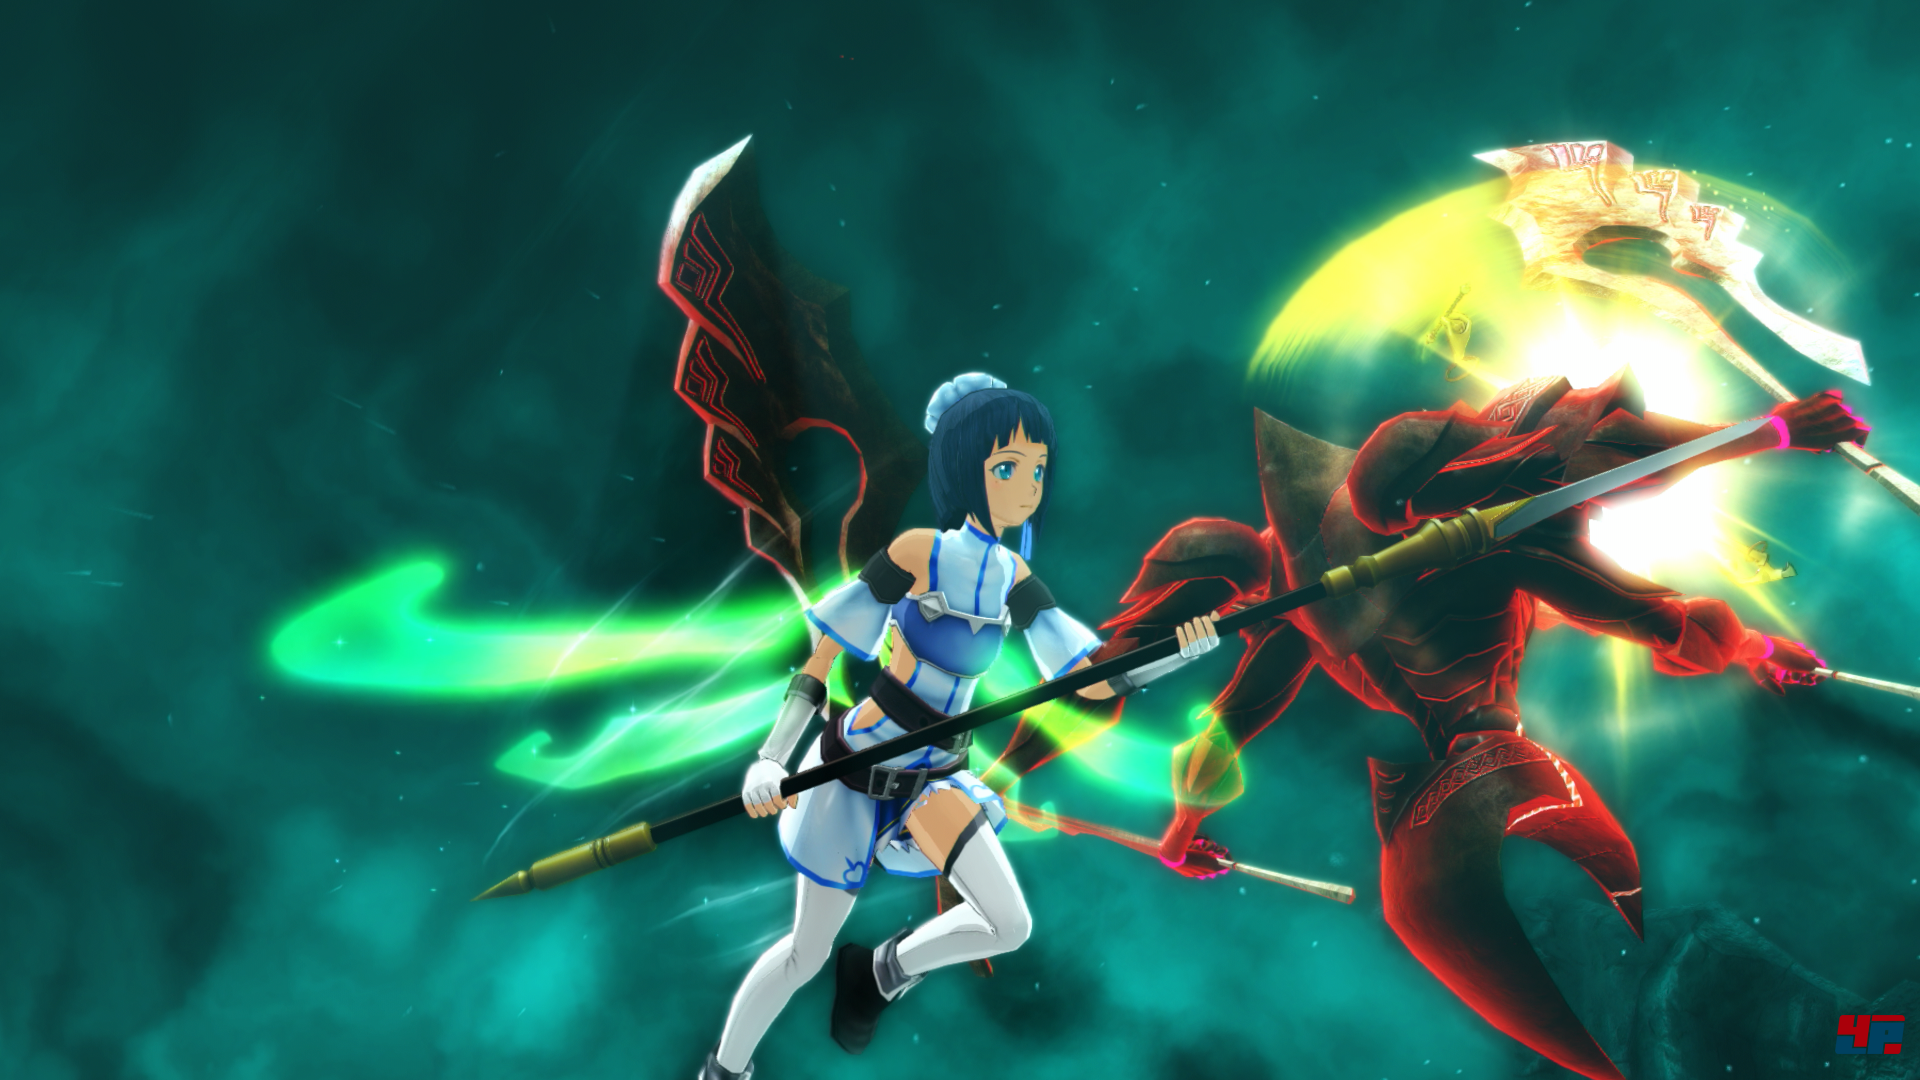 Accel World Vs Sword Art Online Anime Crossover Erscheint Im Juli